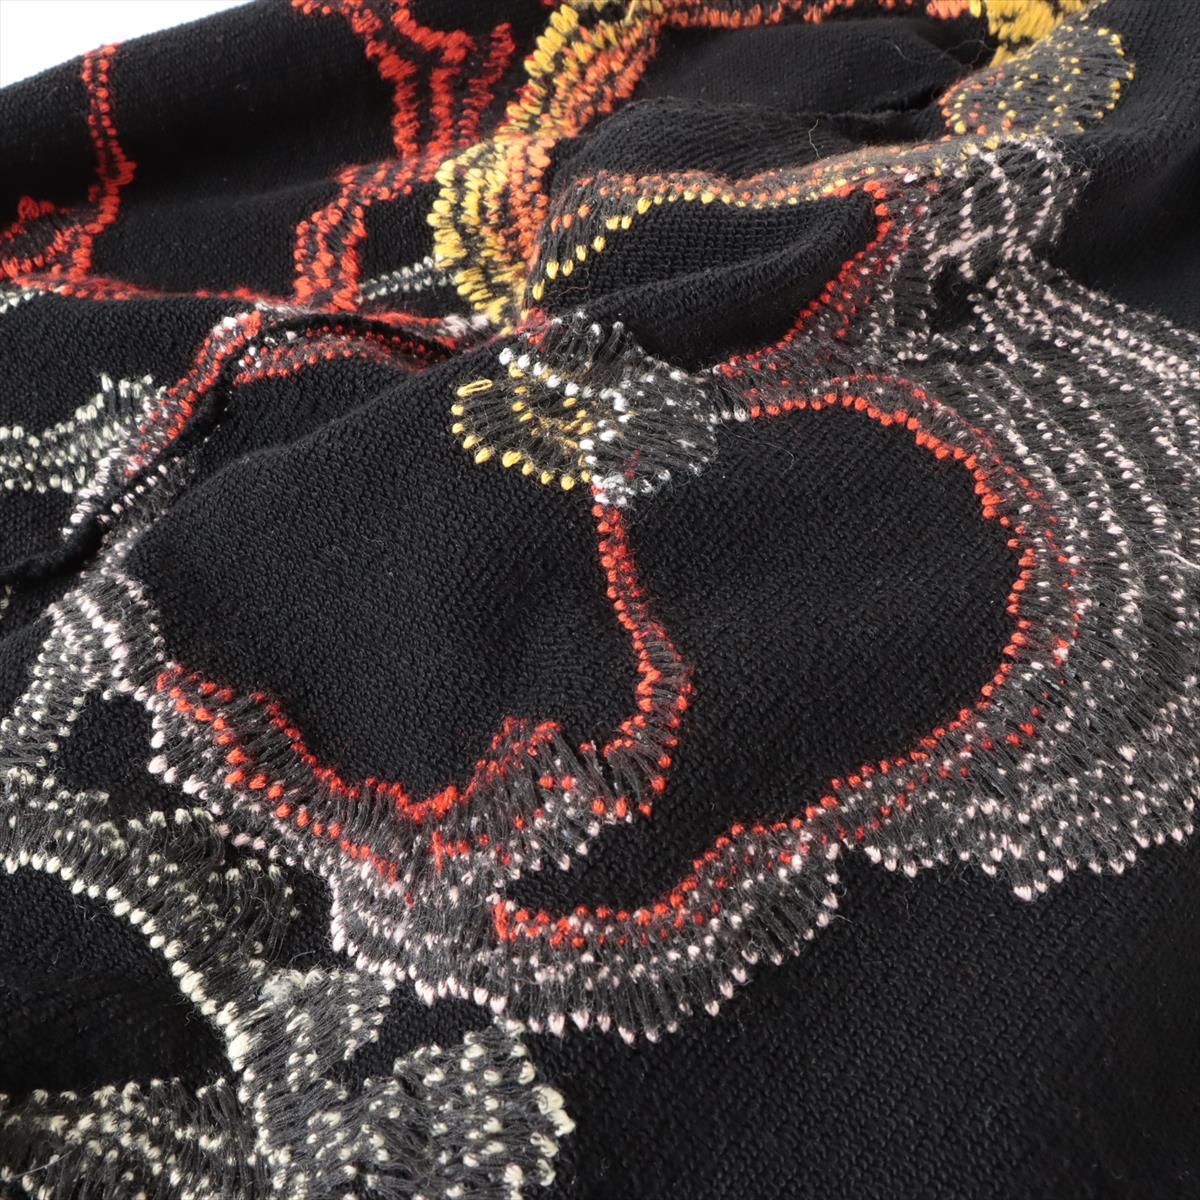 Loewe 22SS Cotton Basic knitted fabric XS Men's Black  H526Y24X01 Pansies Embroidery Sweatshir